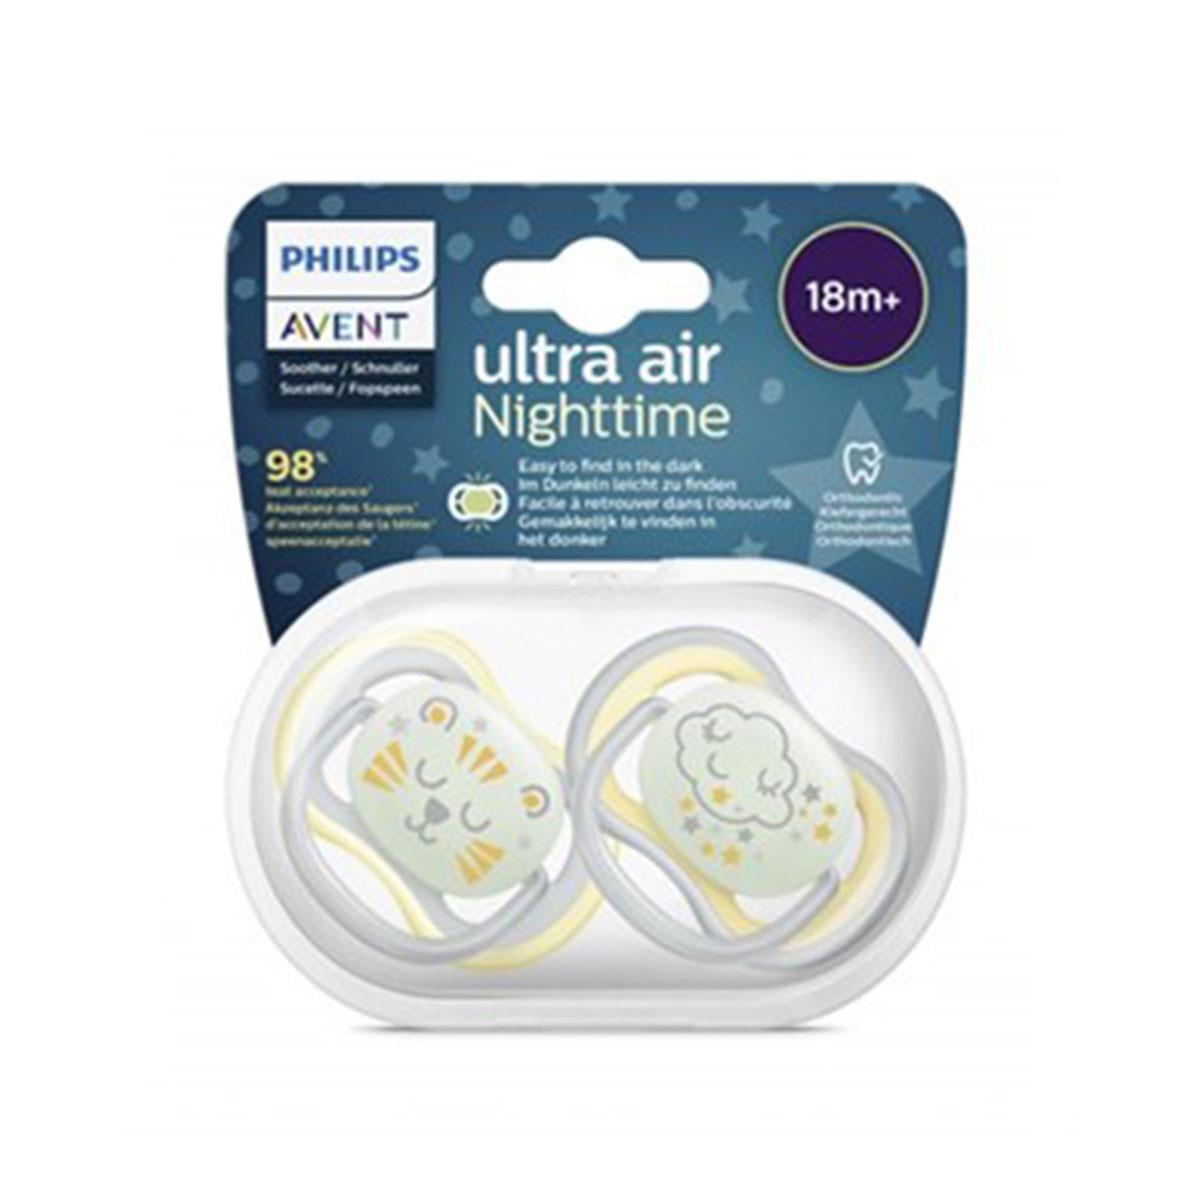 Philips Avent Ultra Air Nighttime Gece Emziği 18+Ay 2'li (Sarı) - Daffne